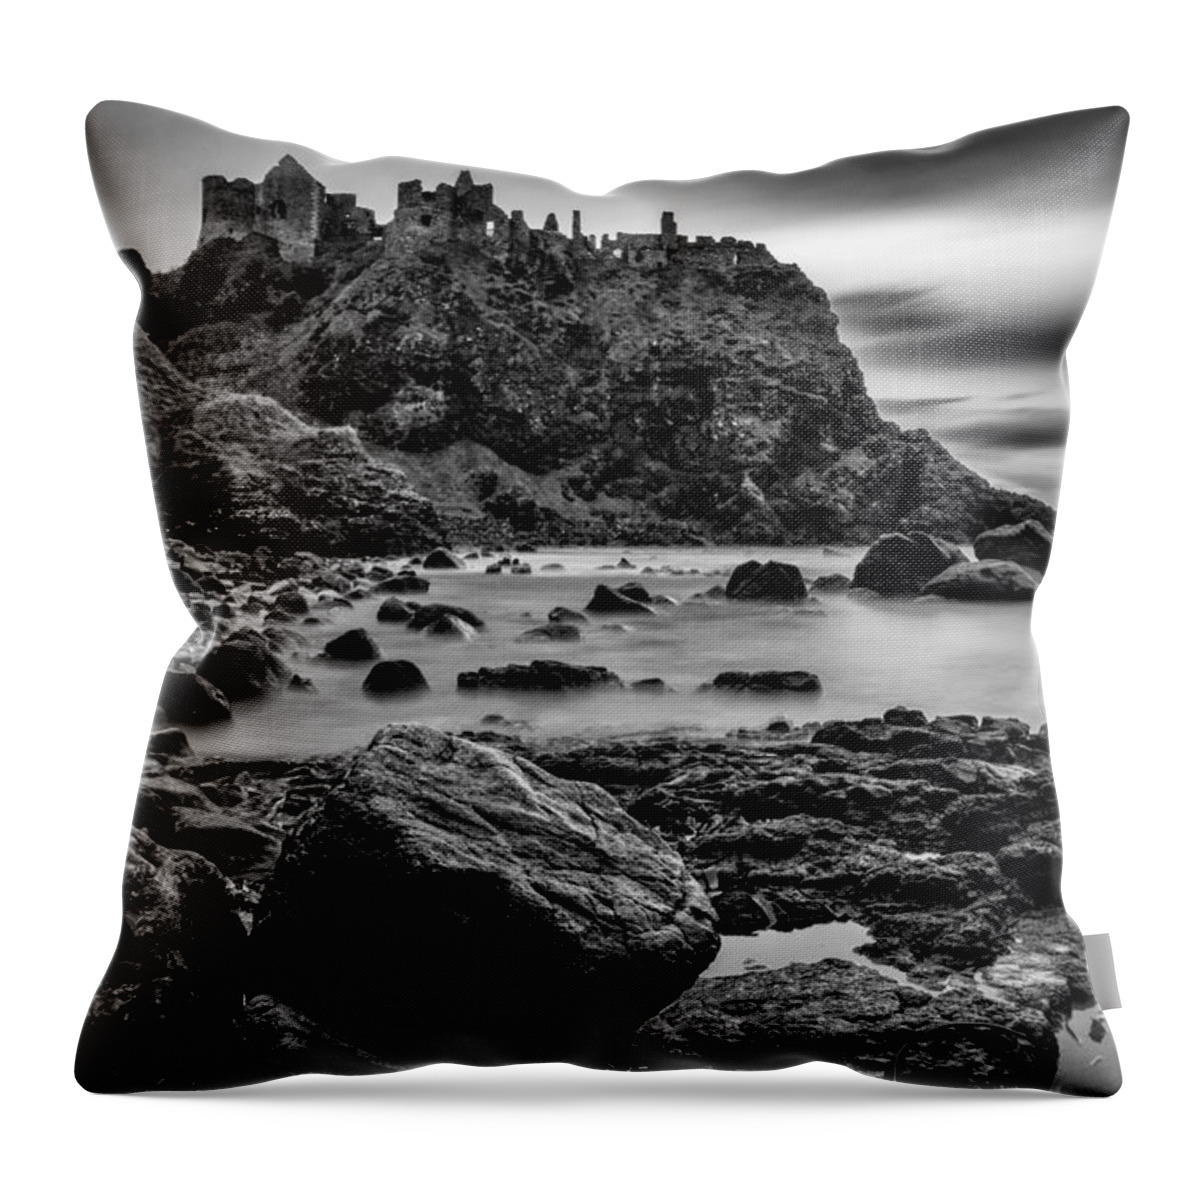 Dunluce Throw Pillow featuring the photograph Dunluce Castle by Nigel R Bell